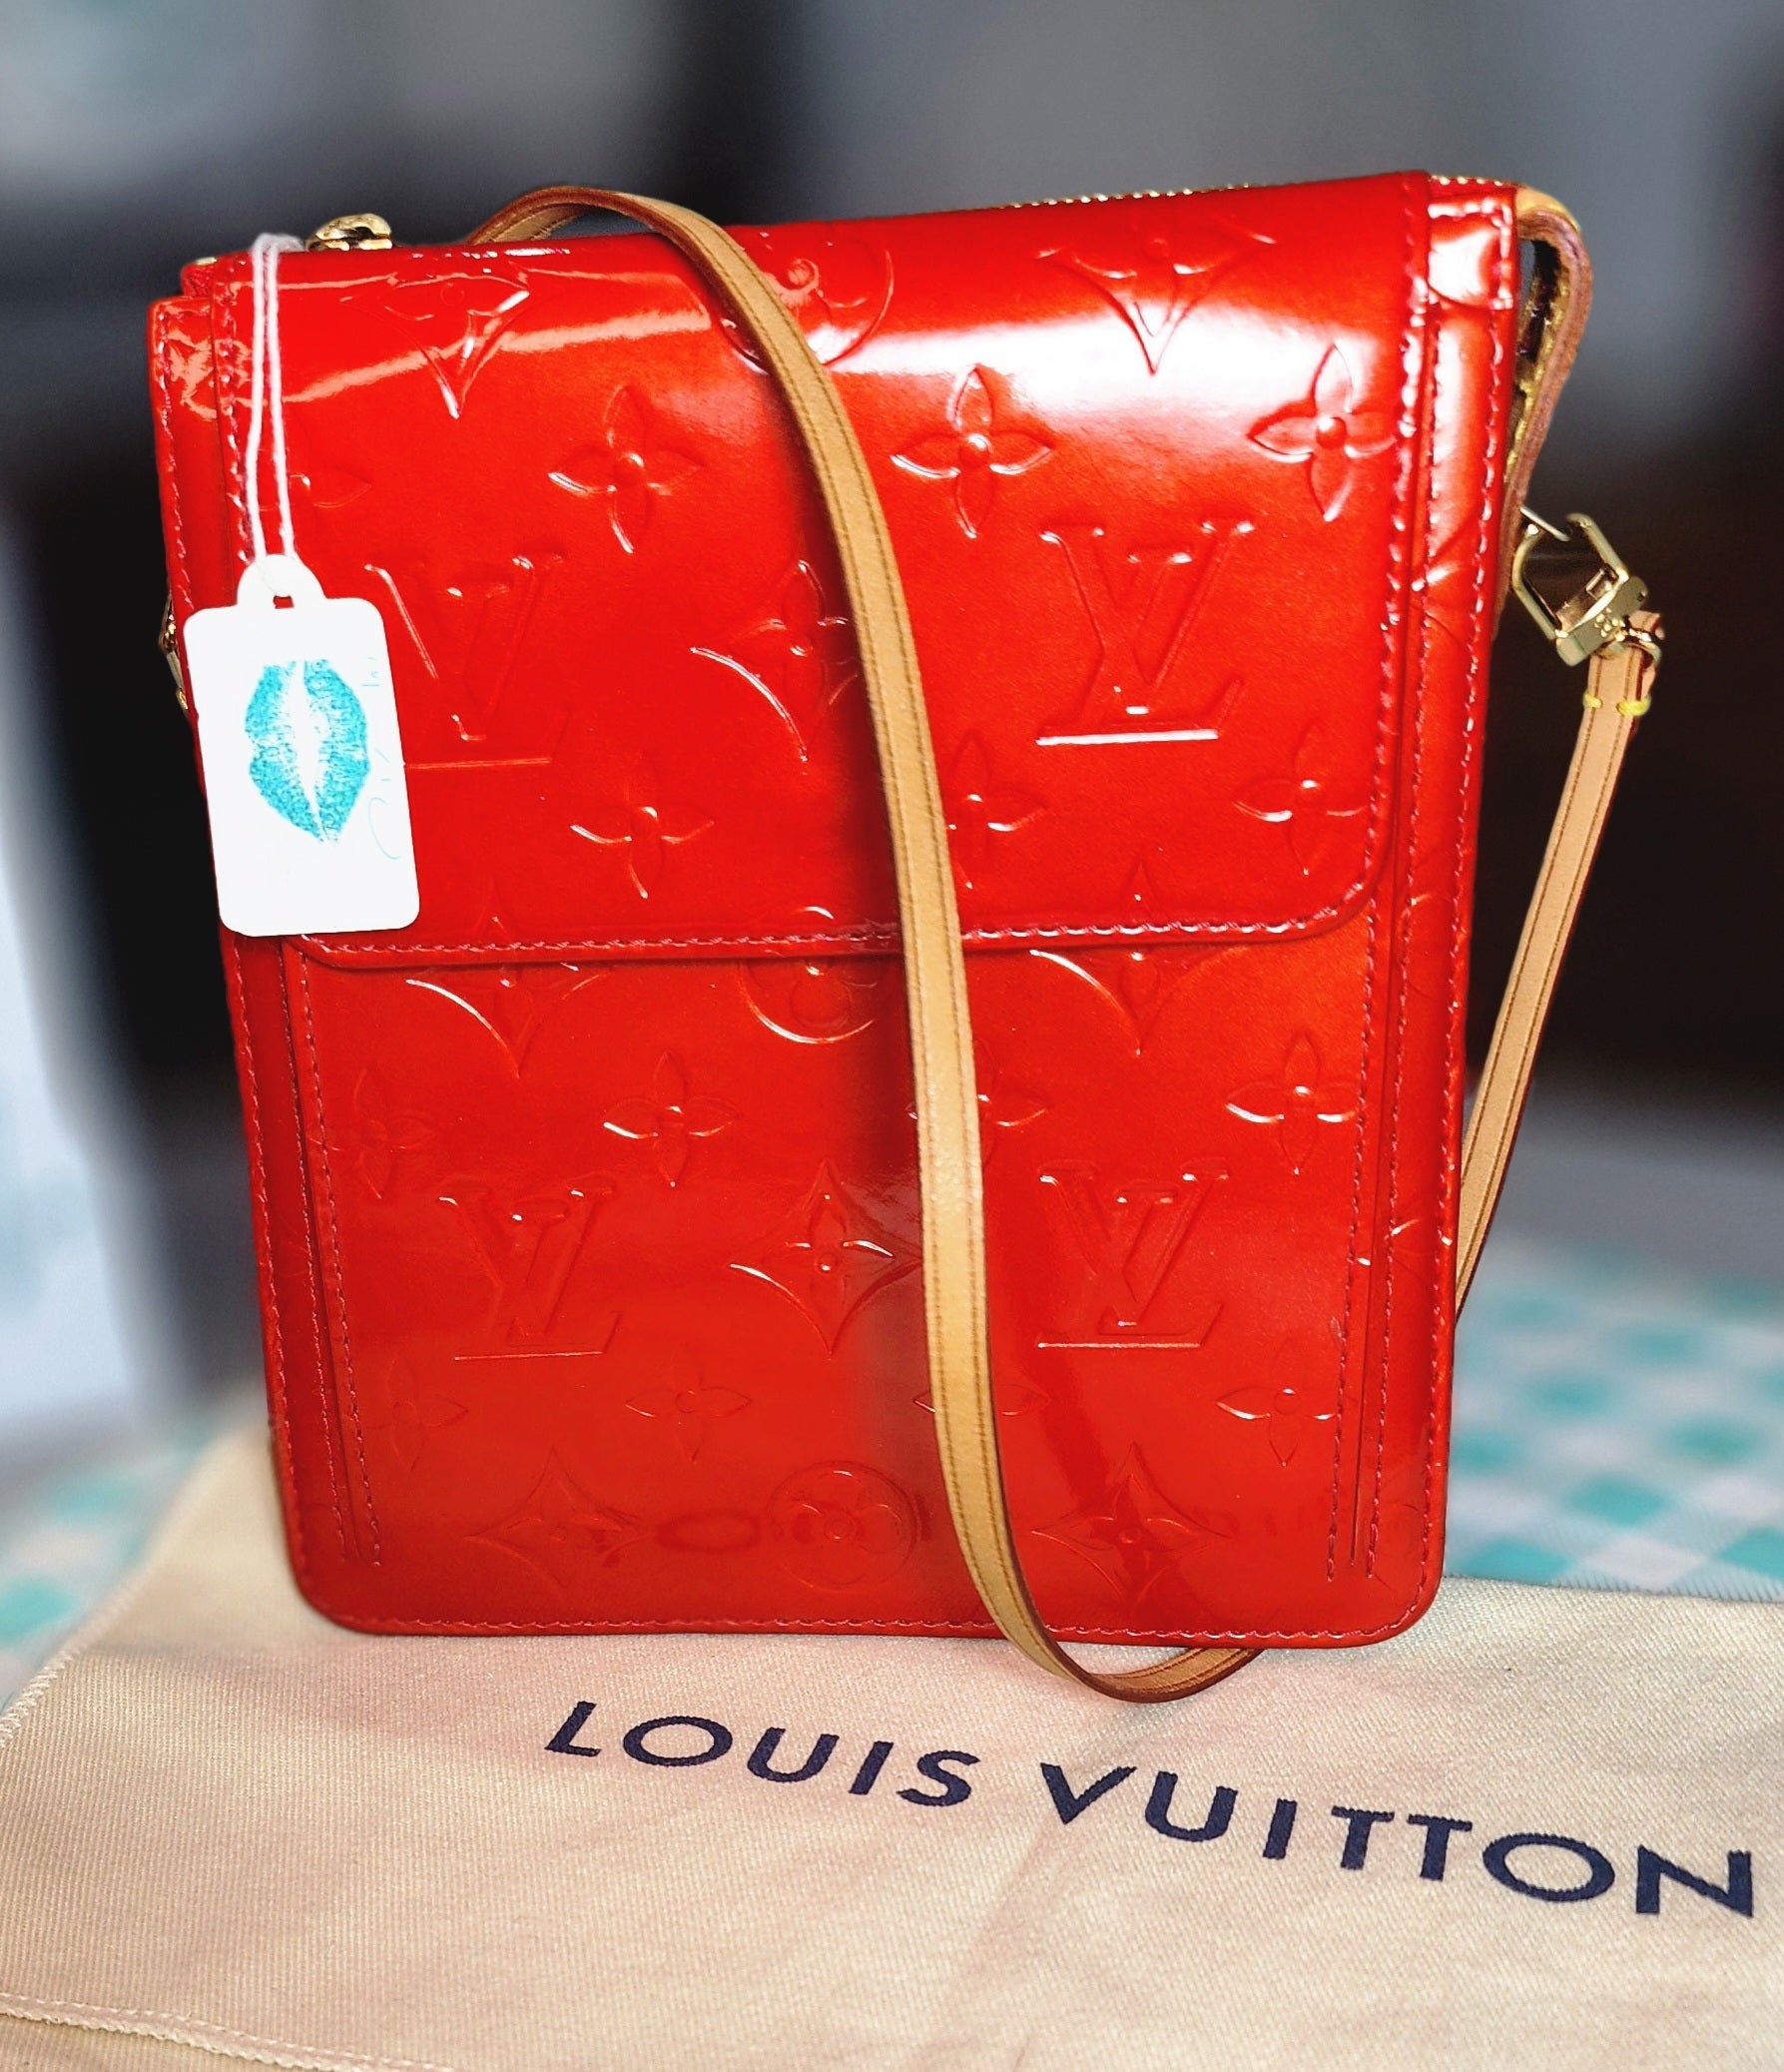 Louis Vuitton Beige Monogram Vernis Mott Bag Louis Vuitton